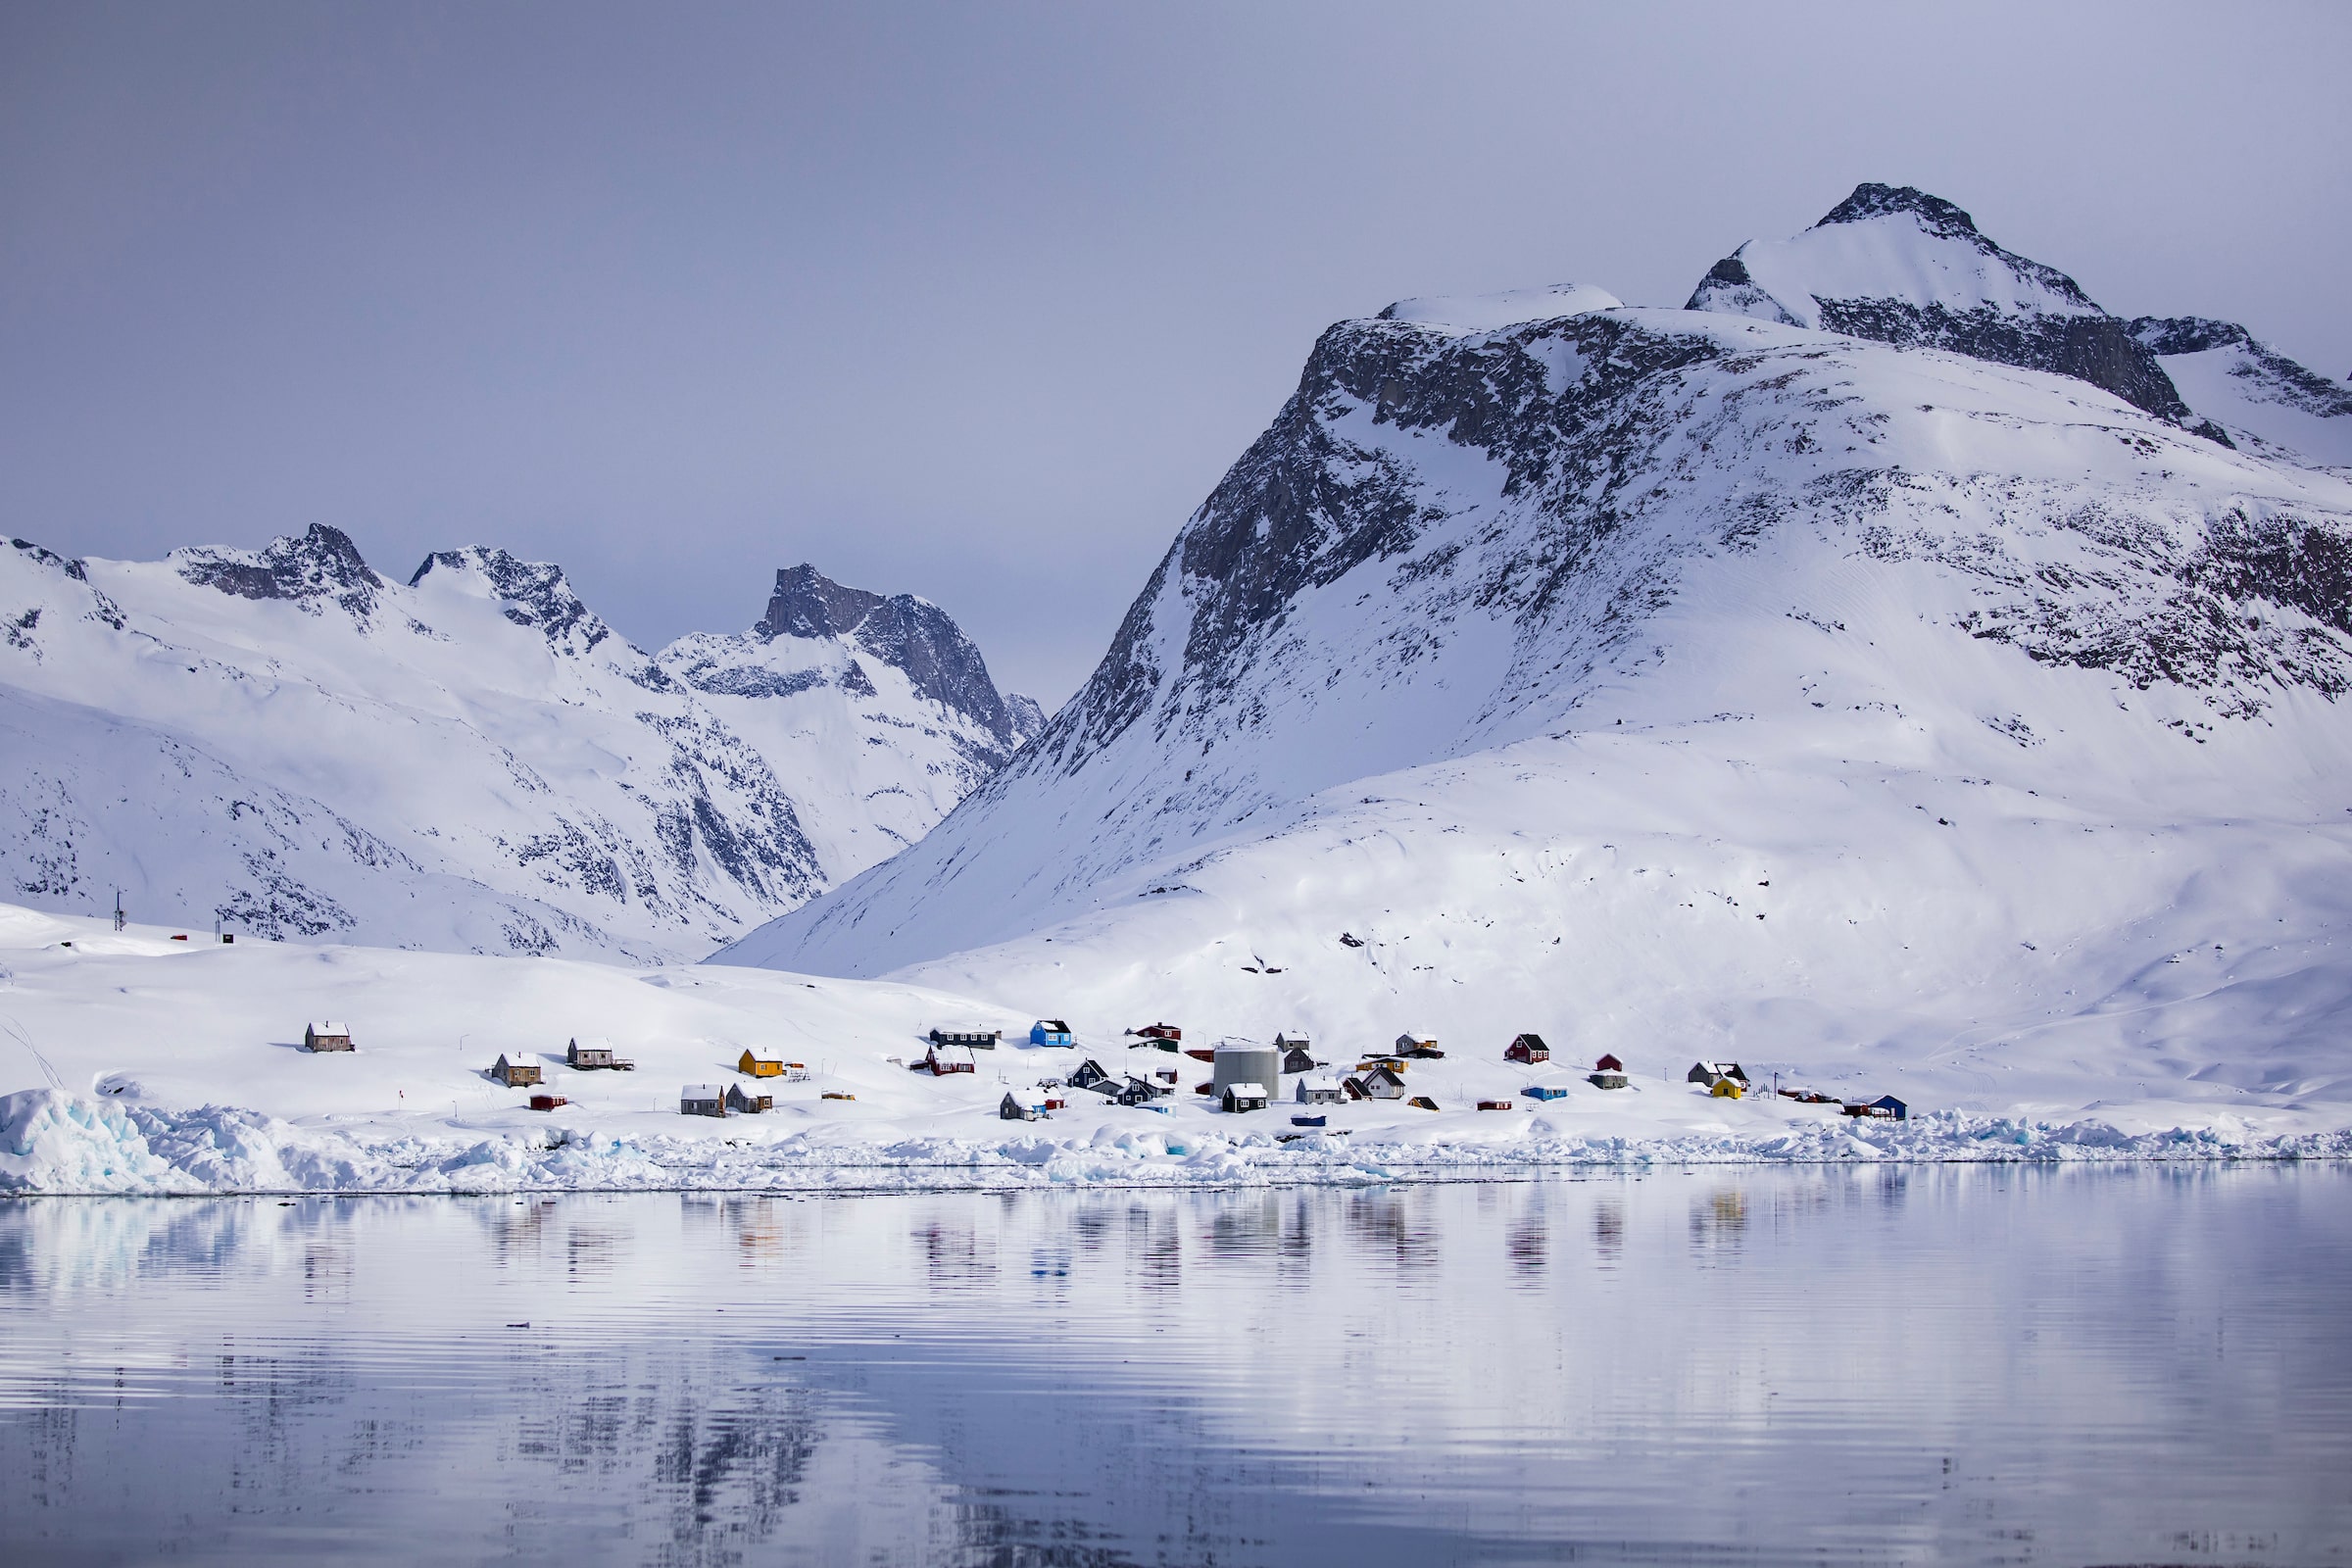 Winter in Tiilerilaaq - Photo by Aningaaq Rosing Carlsen - Visit Greenland